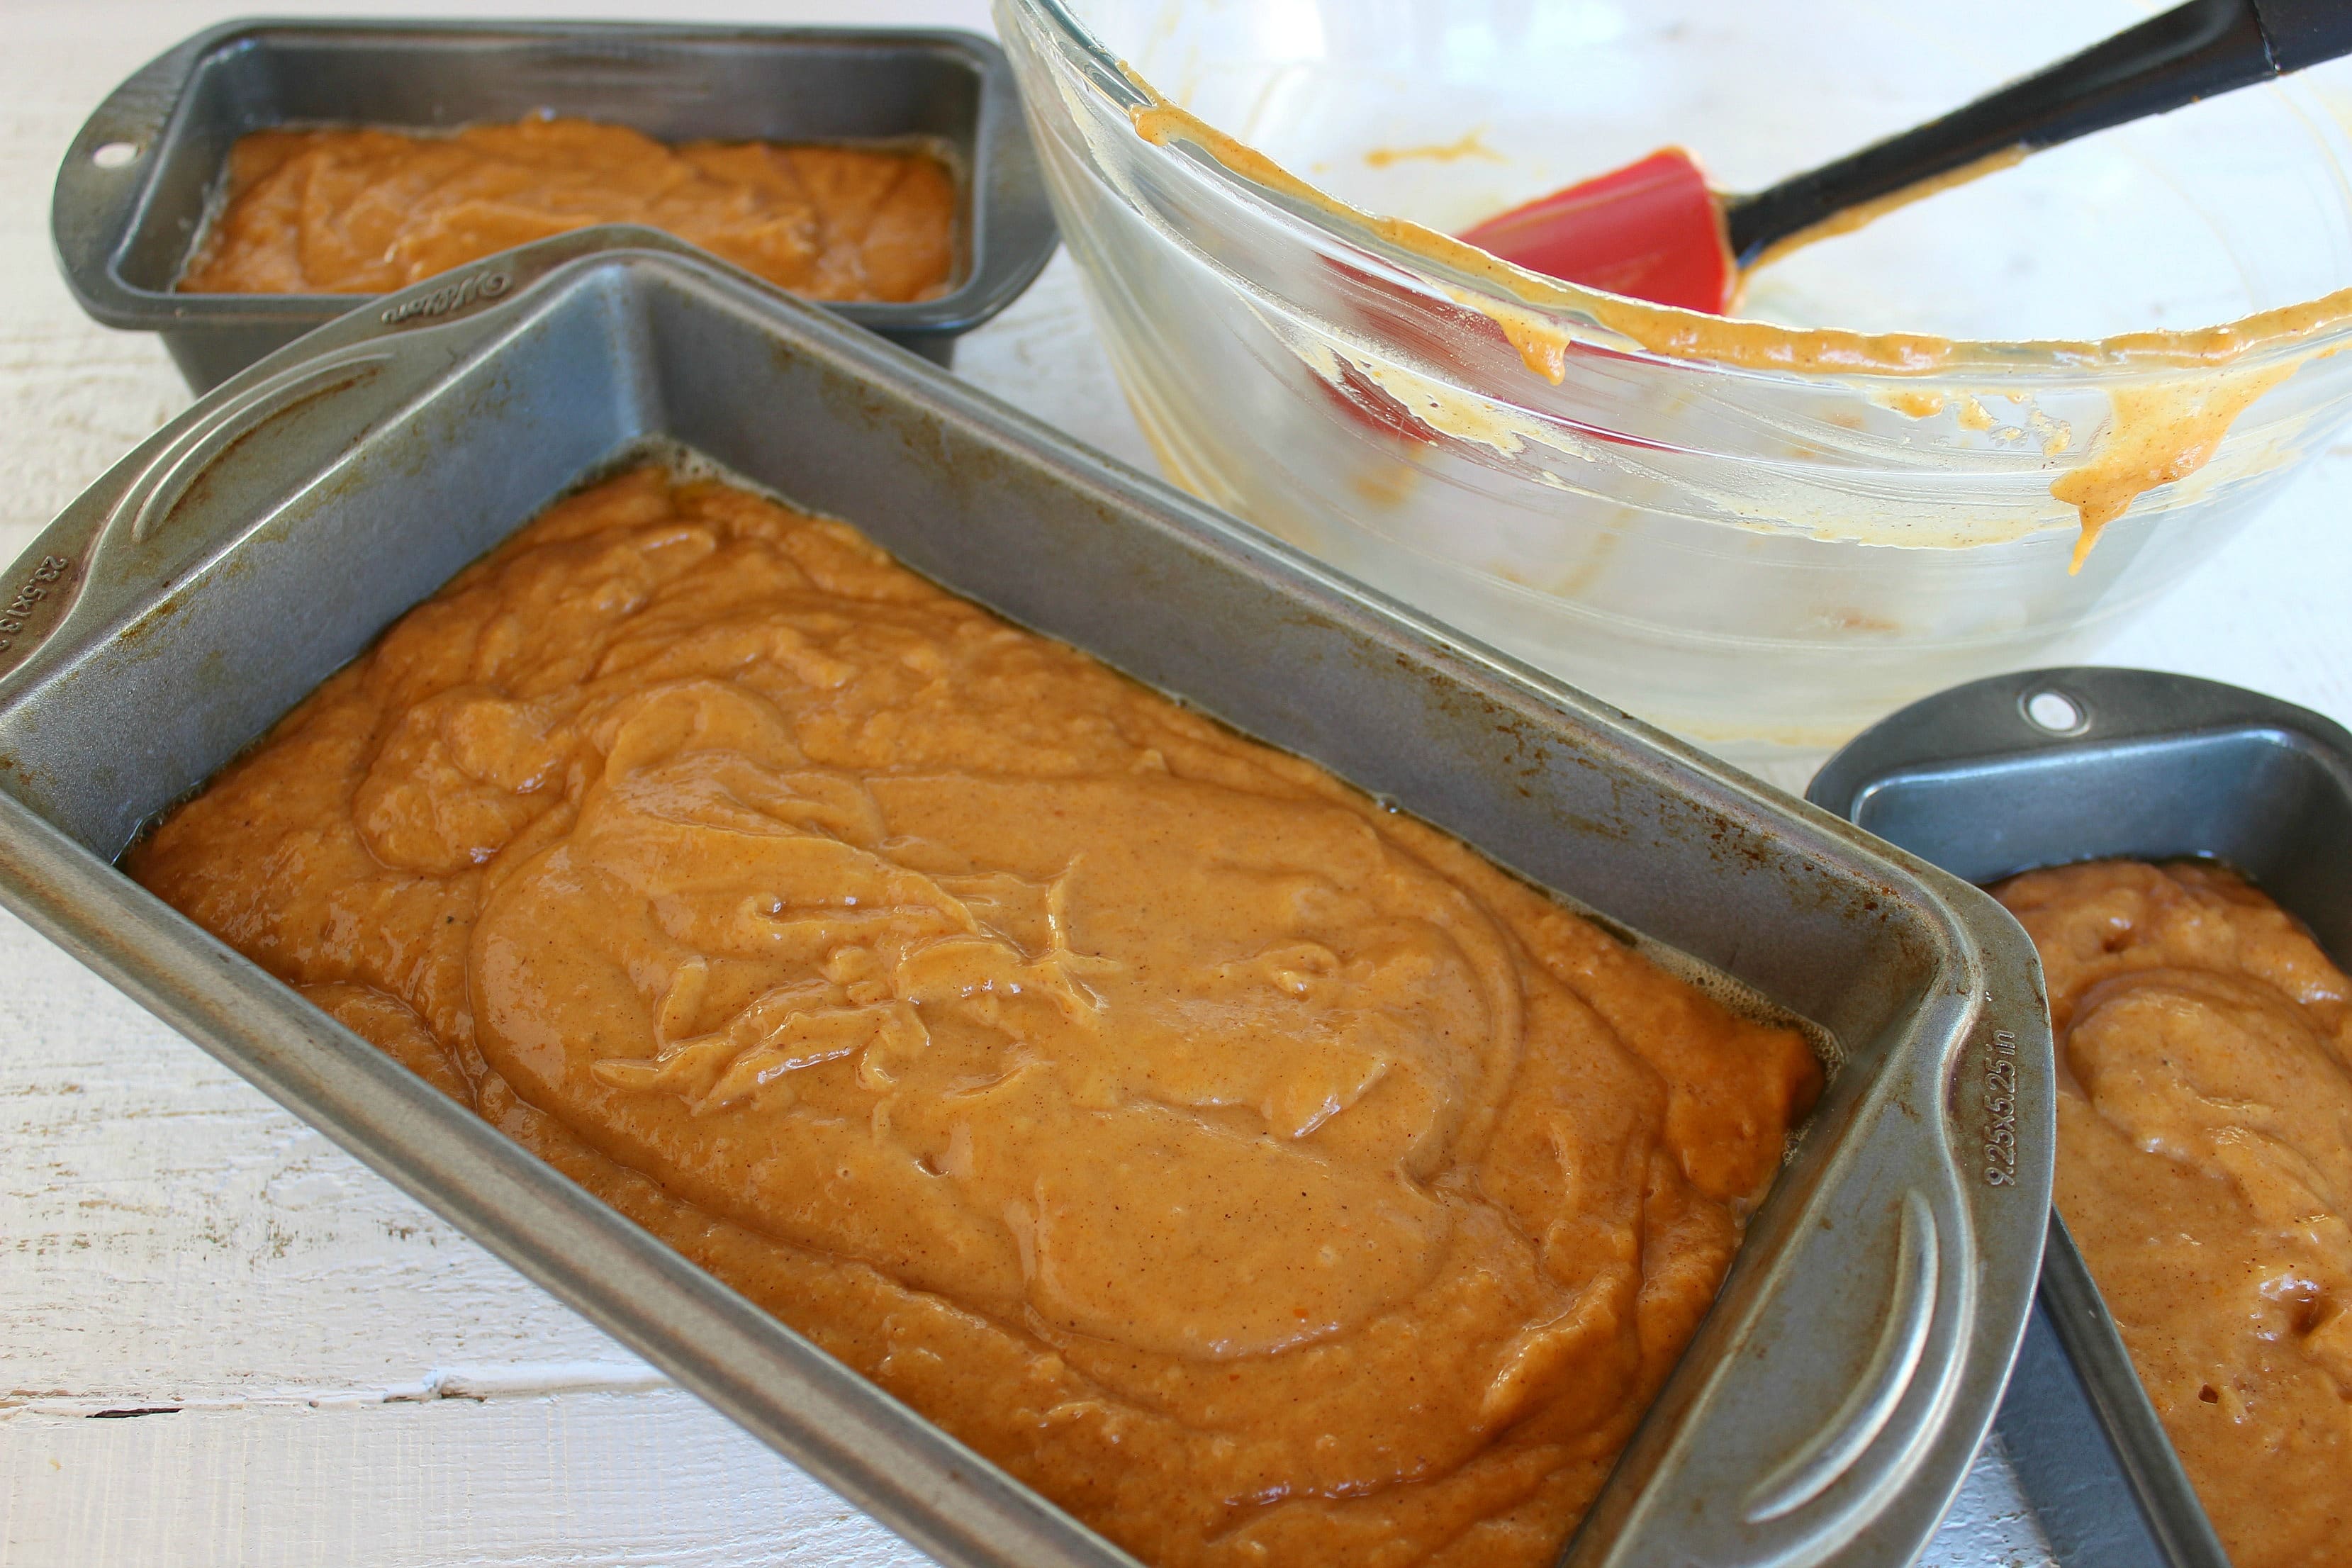 Pour the pumpkin batter into your loaf pans.